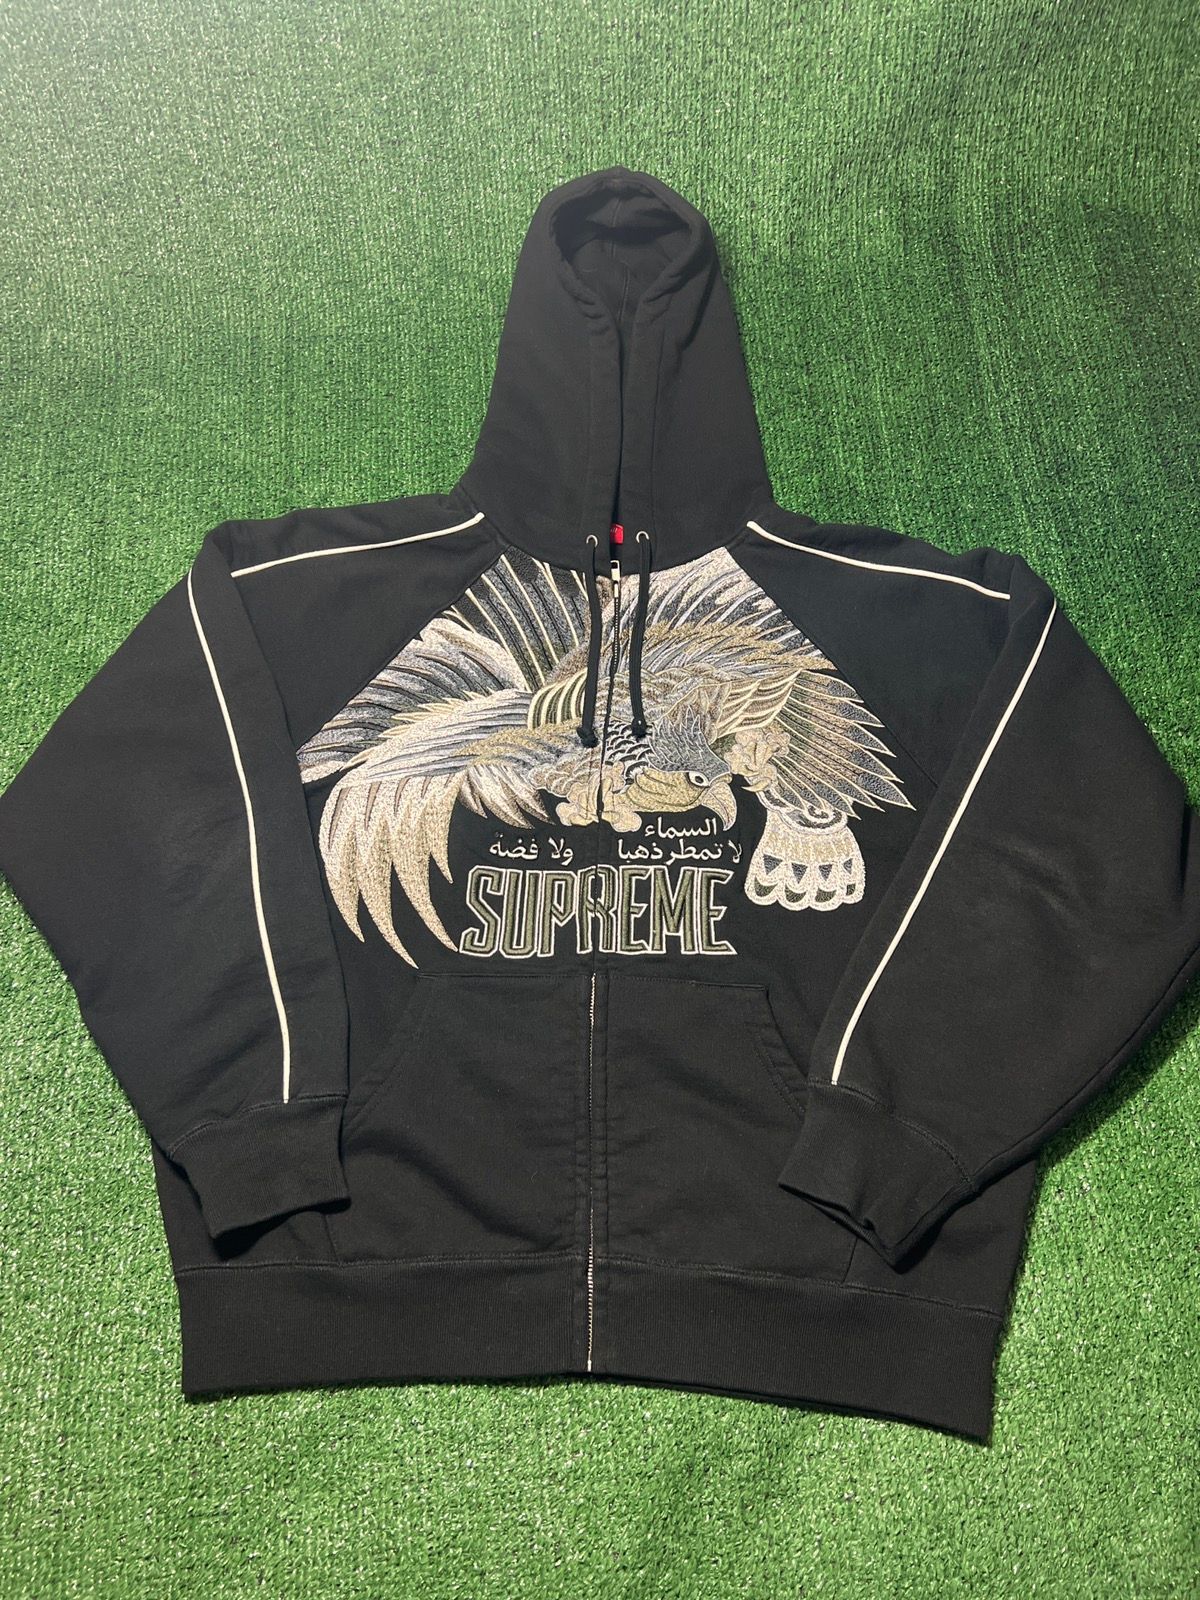 Pre-owned Supreme Black Falcon Raglan Zip Up Hooded Sweatshirt Size S